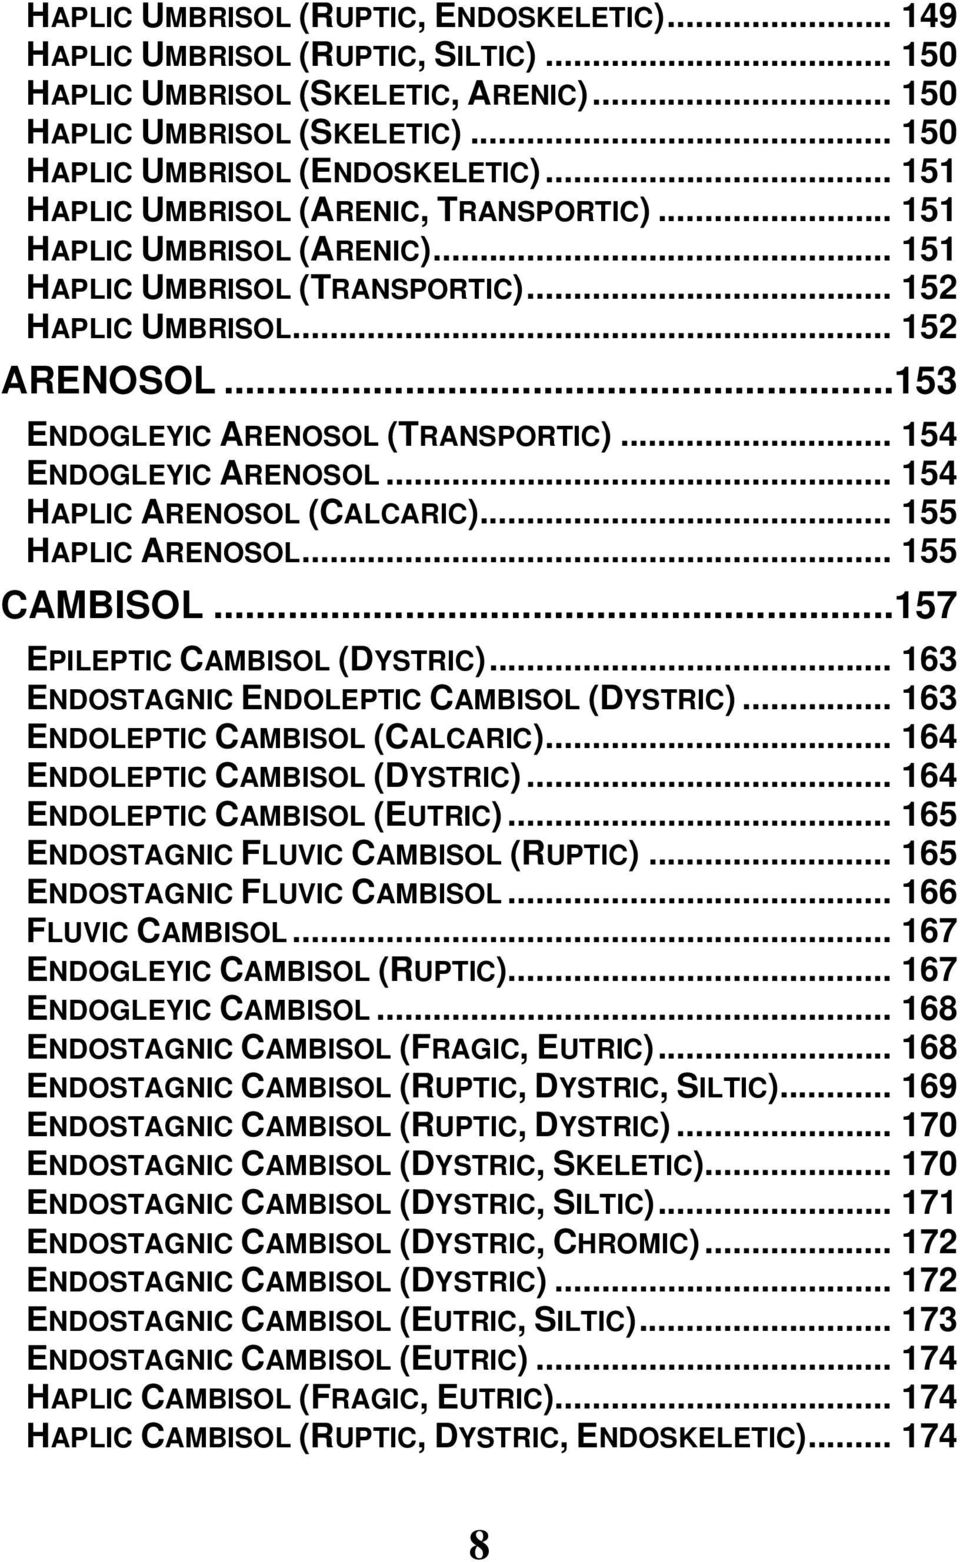 .. 154 ENDOGLEYIC ARENOSOL... 154 HAPLIC ARENOSOL (CALCARIC)... 155 HAPLIC ARENOSOL... 155 CAMBISOL...157 EPILEPTIC CAMBISOL (DYSTRIC)... 163 ENDOSTAGNIC ENDOLEPTIC CAMBISOL (DYSTRIC).